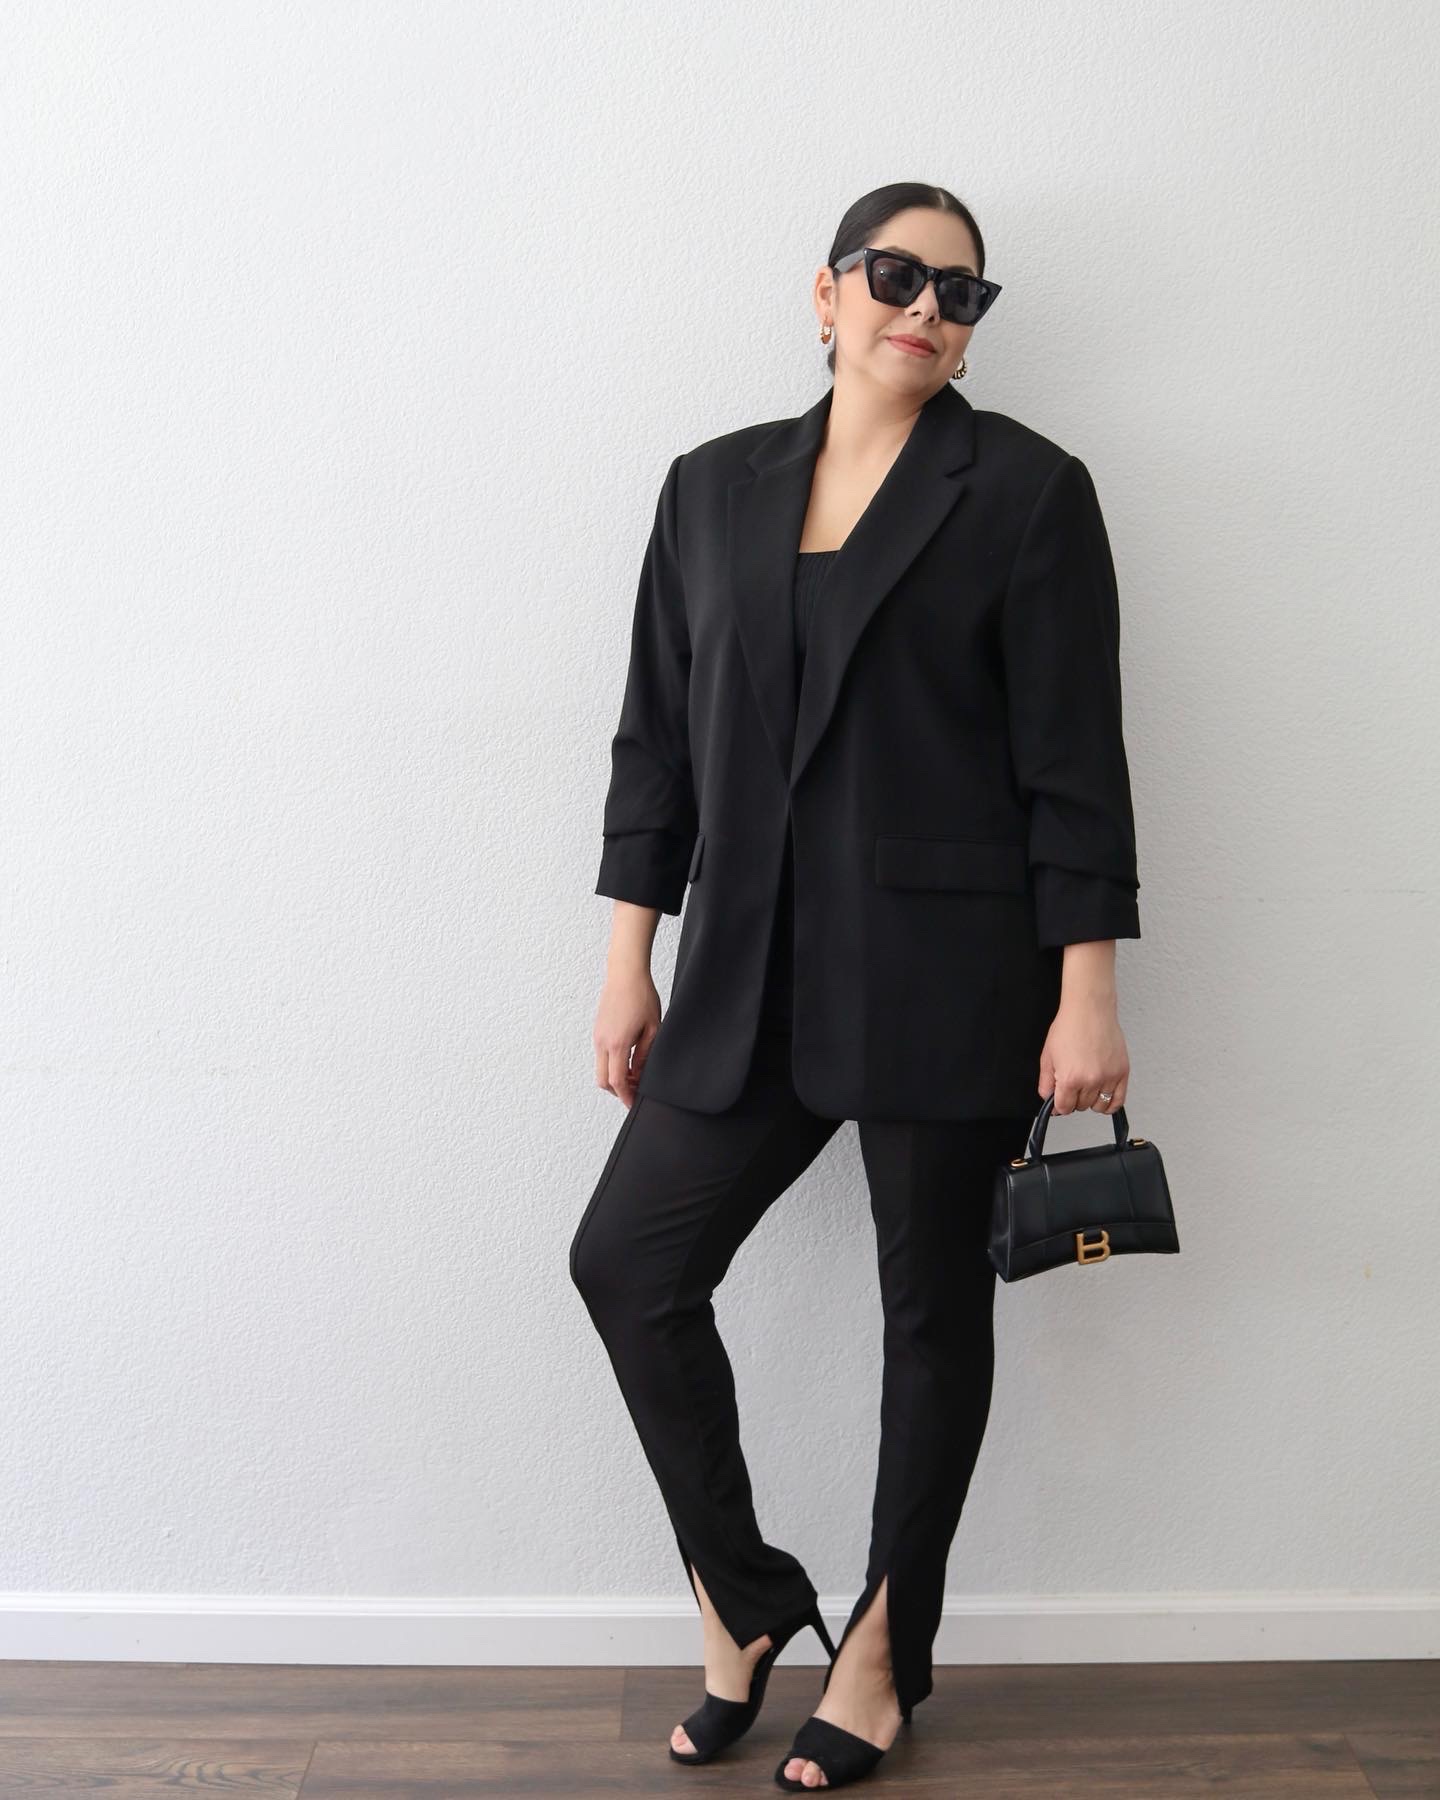 Four Ways to Style Black Slit hem leggings - Lil bits of Chic